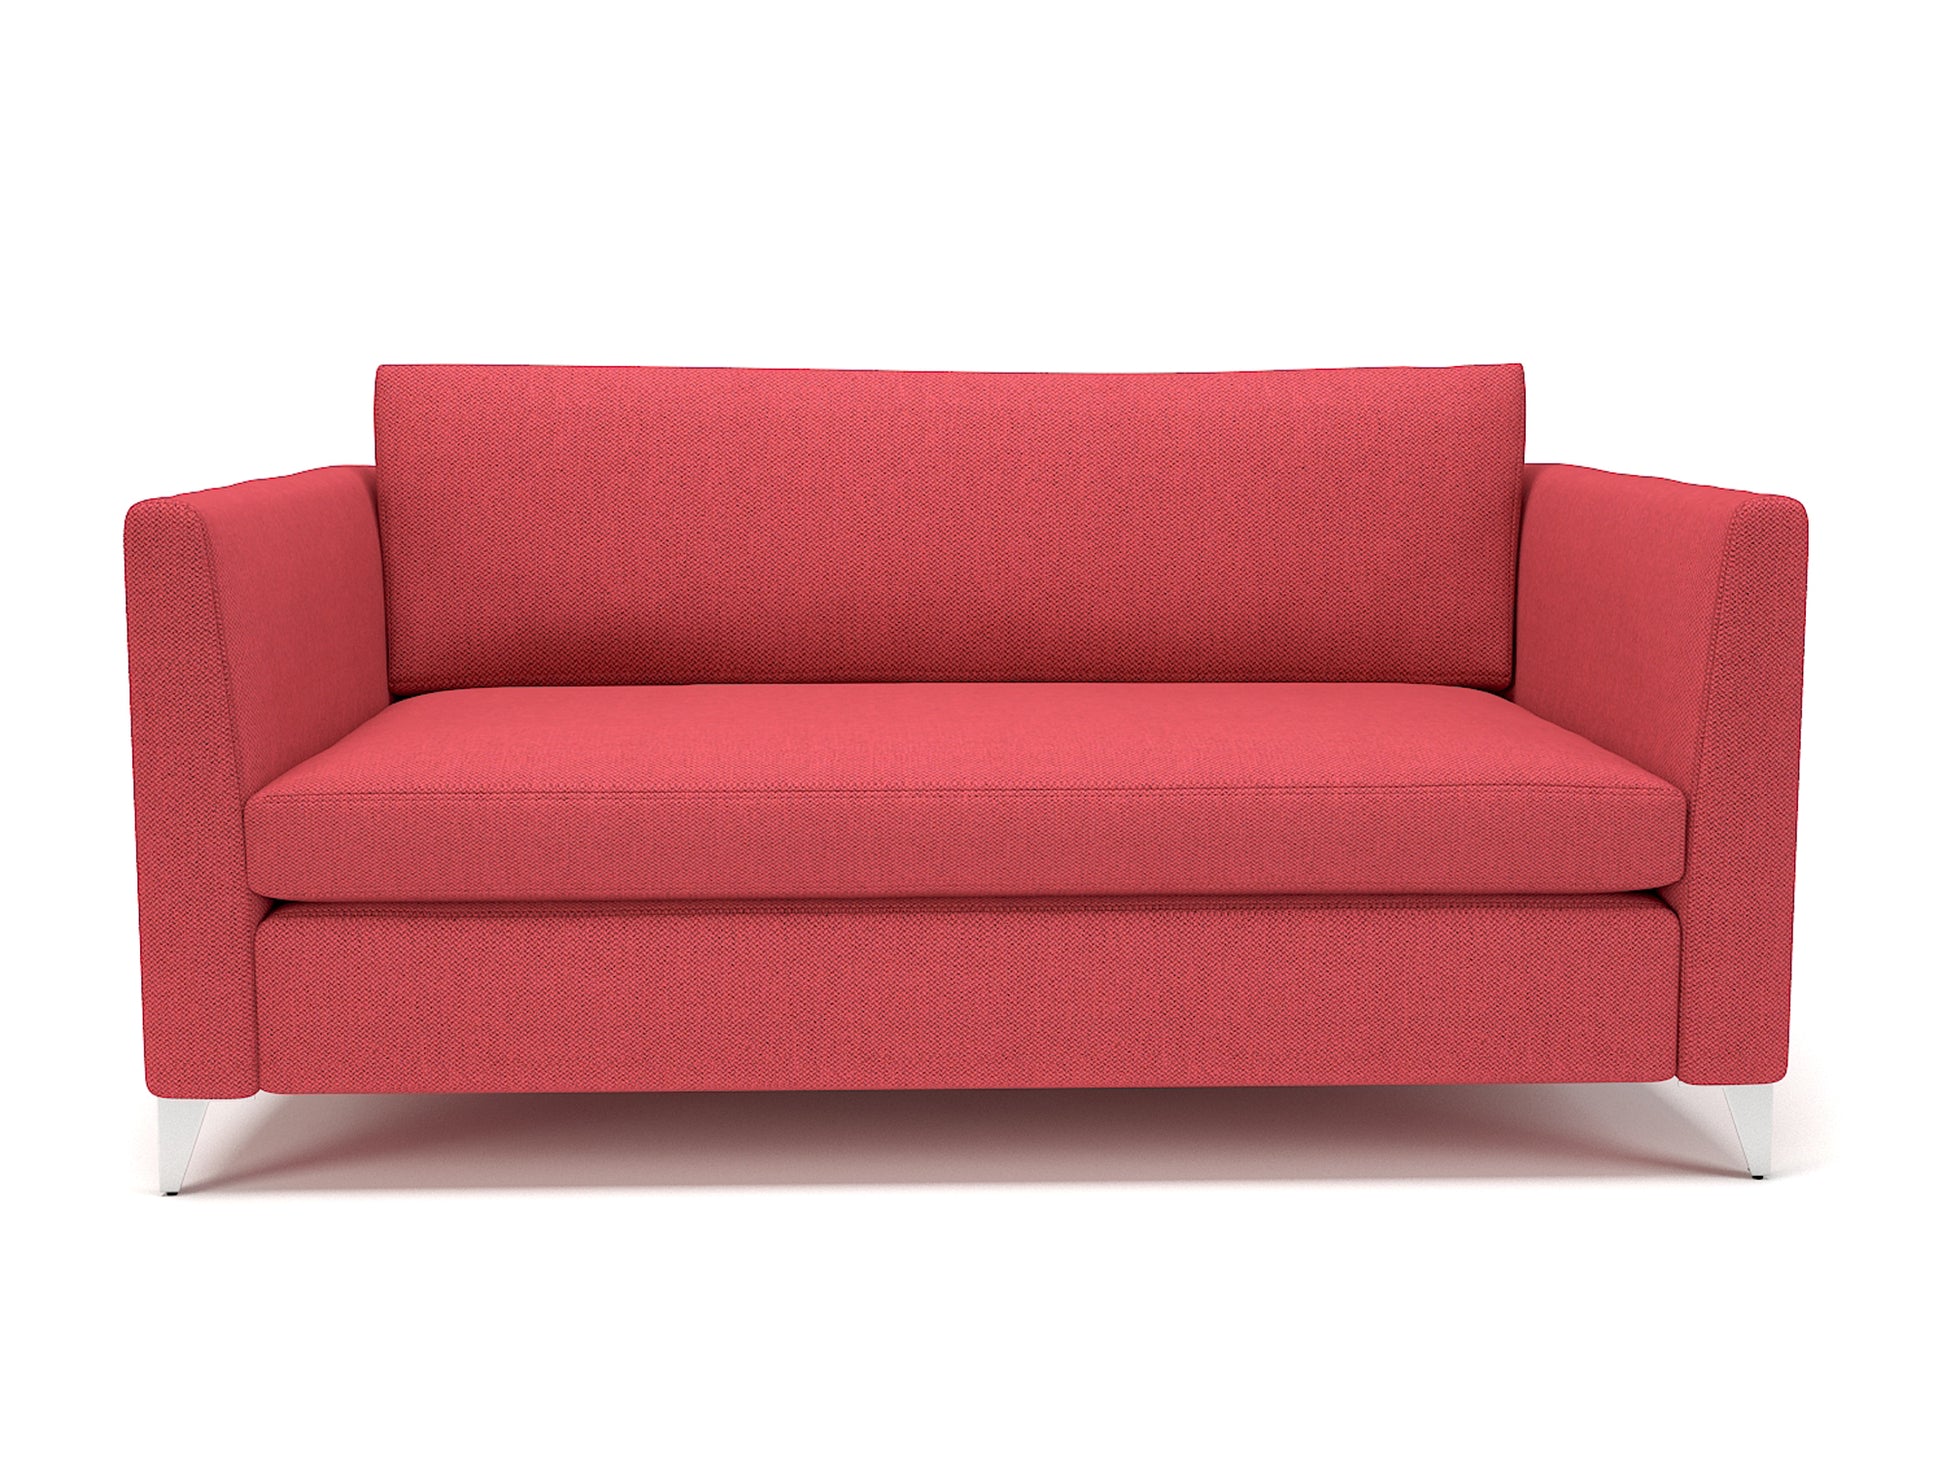 Roselle 157cm Wide Sofa in Camira Era Fabric